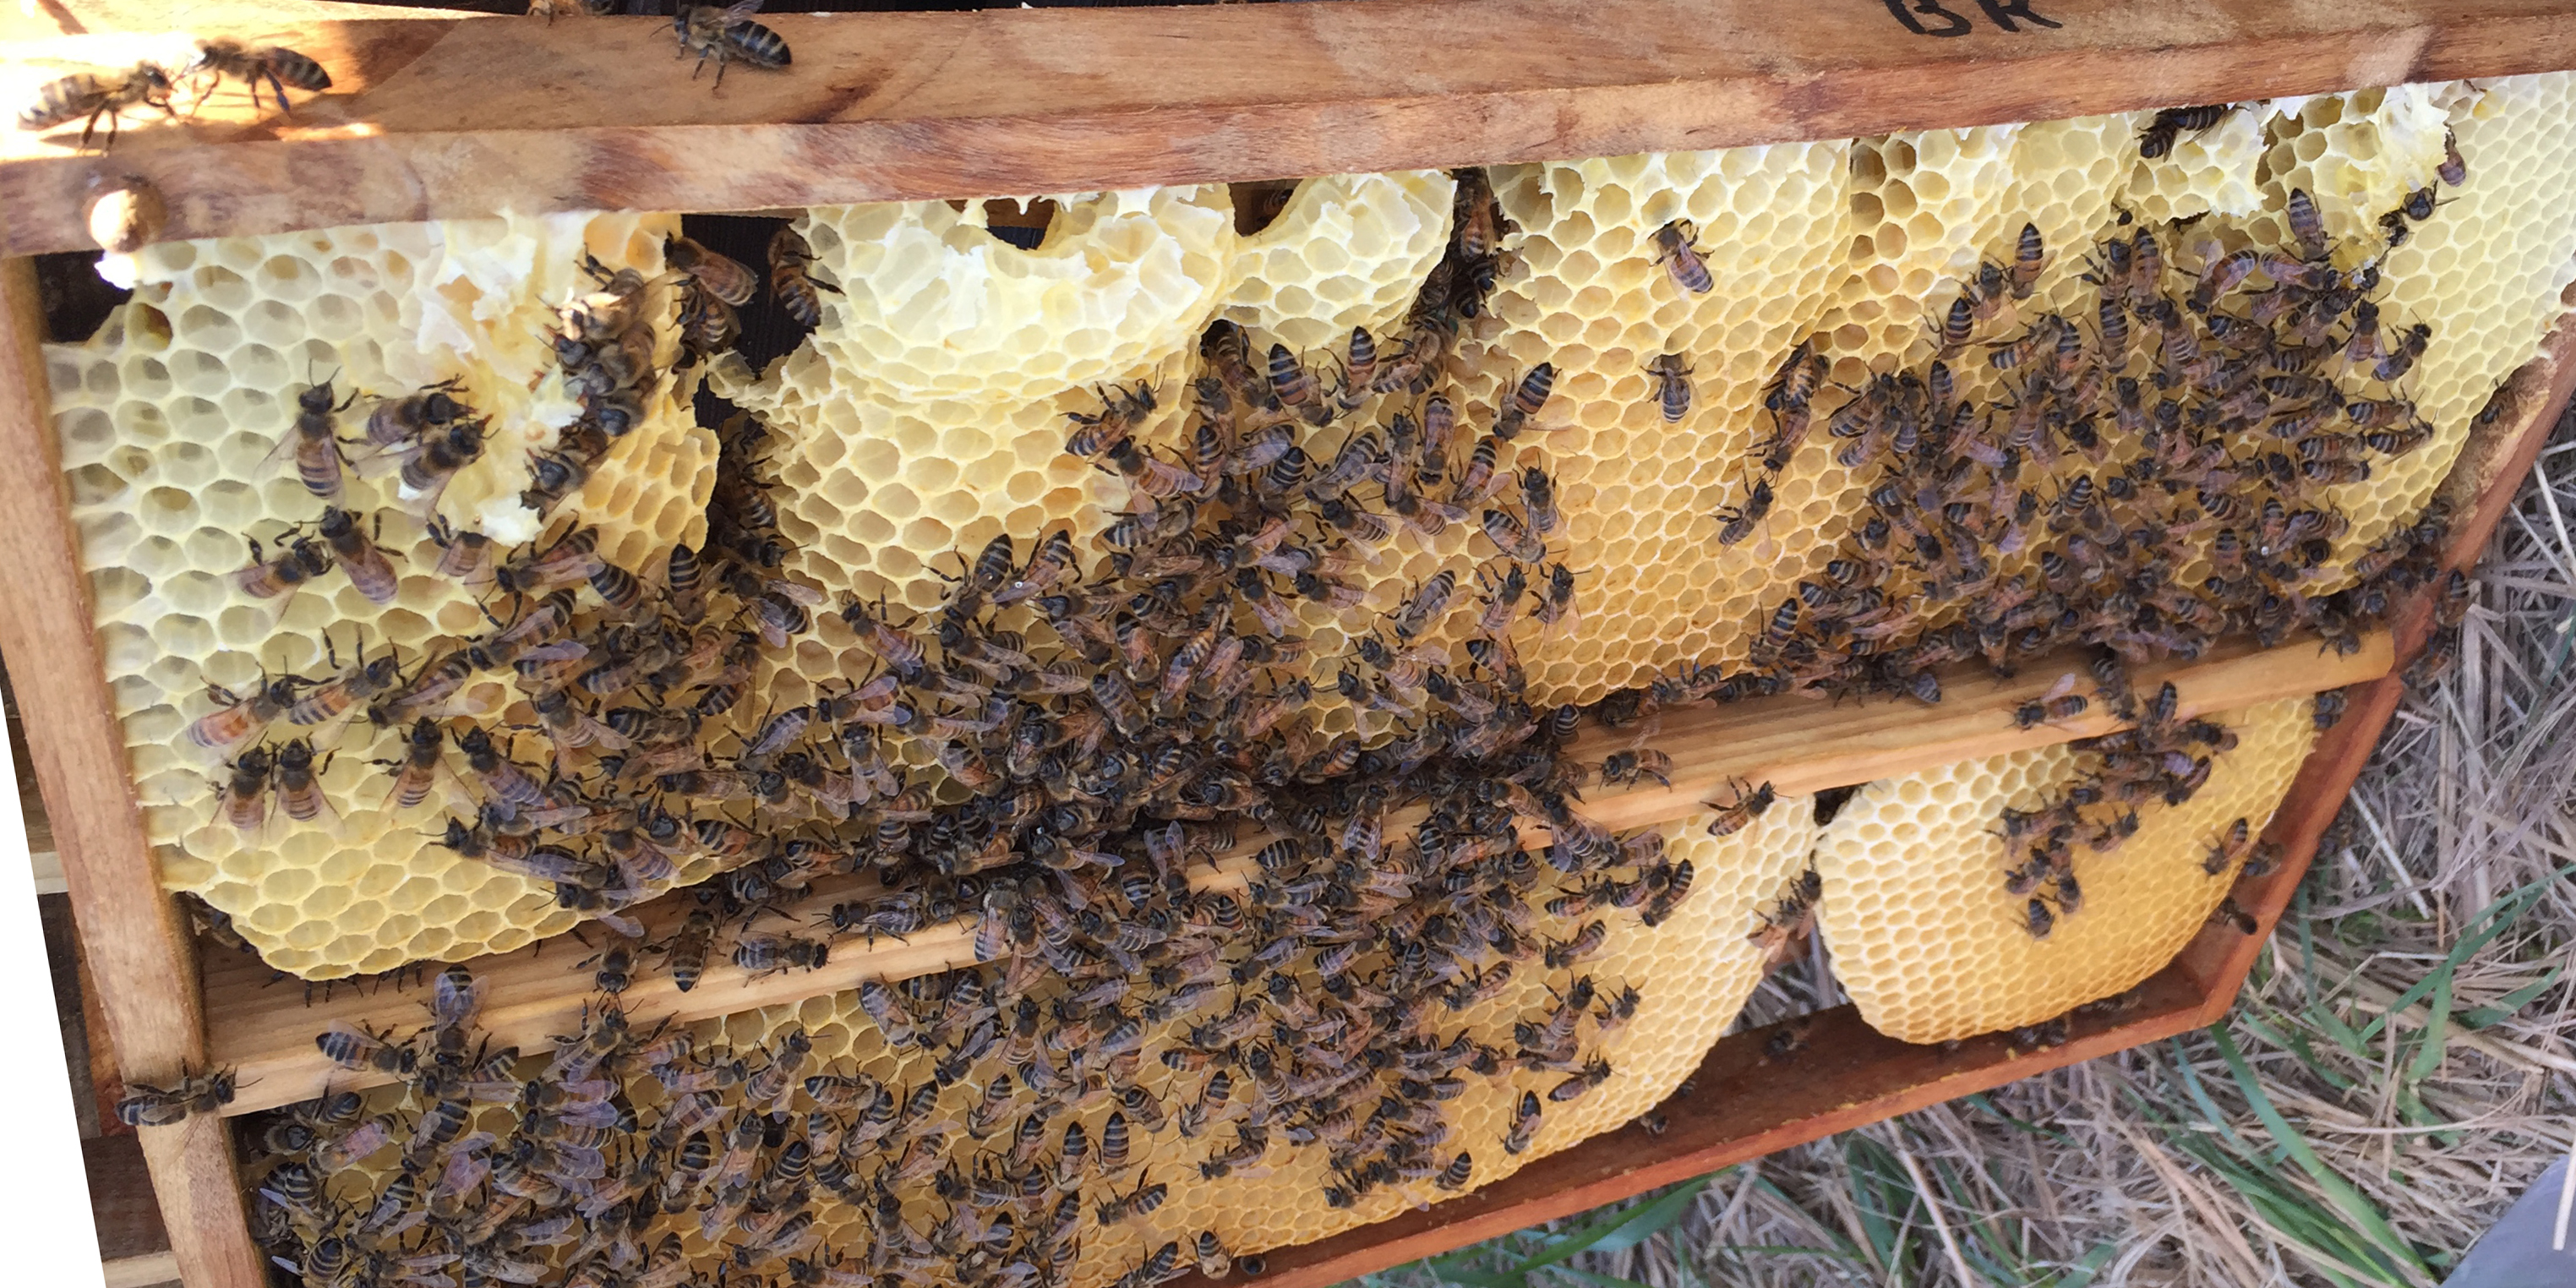 Baurahmen, Drohnenrahmen aus Bienenvolk